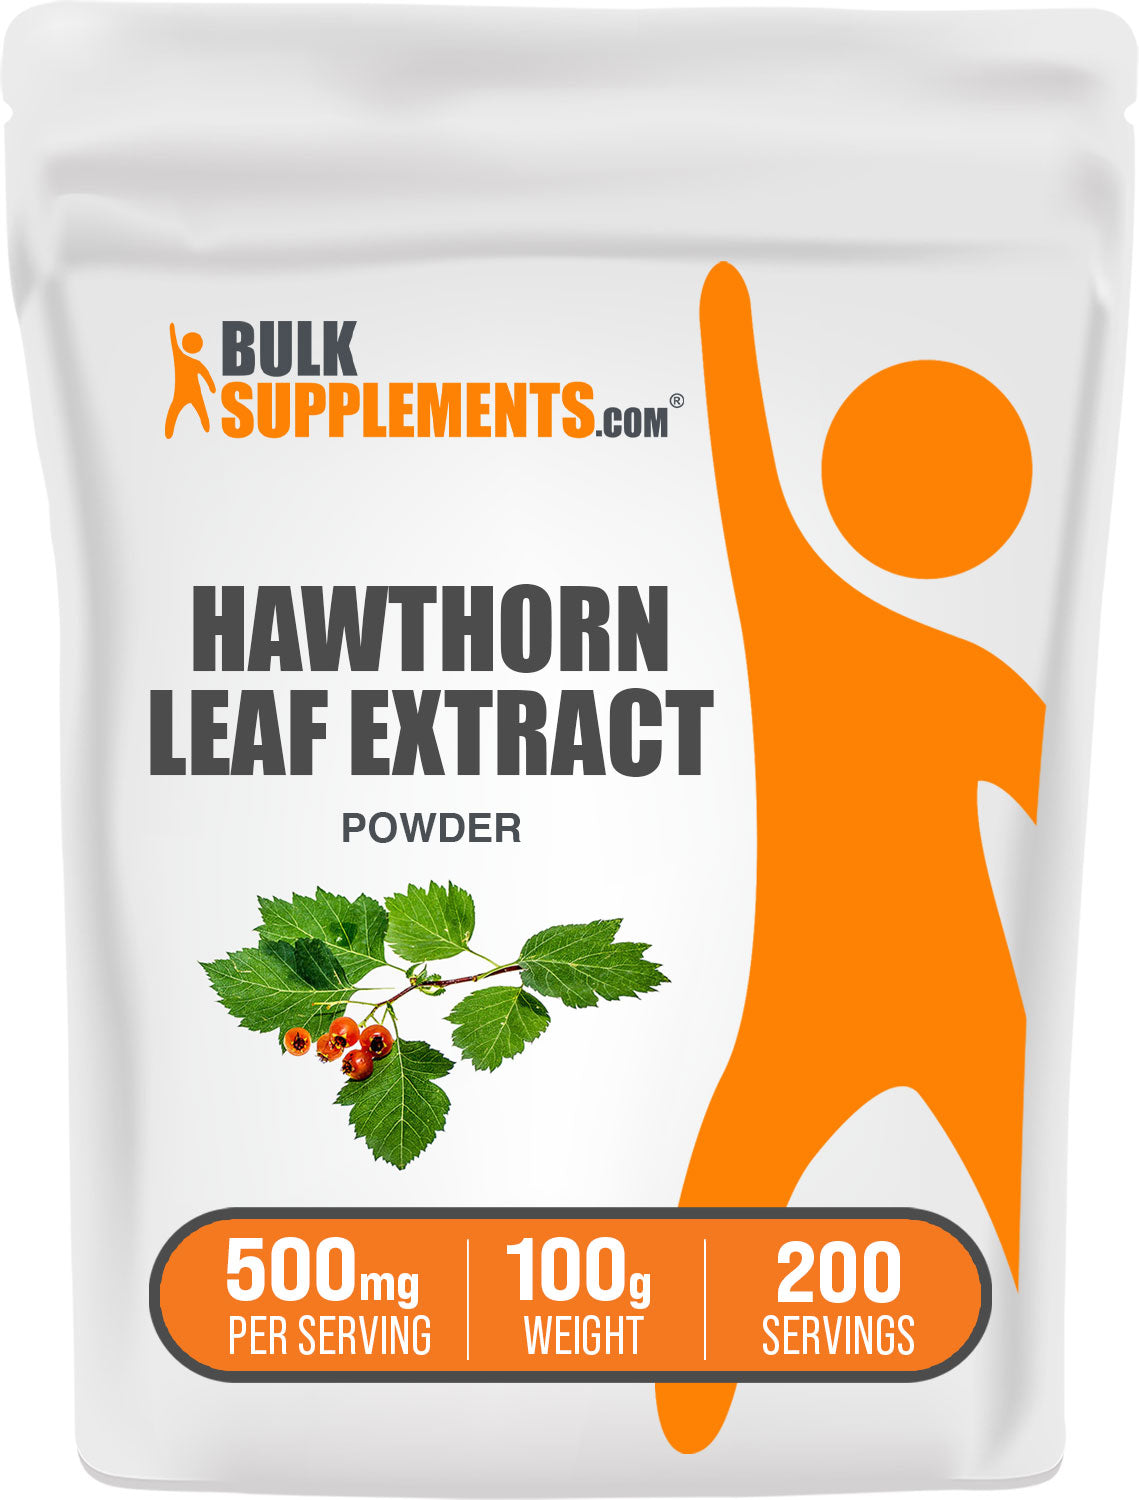 Hawthorn Leaf Extract 100g